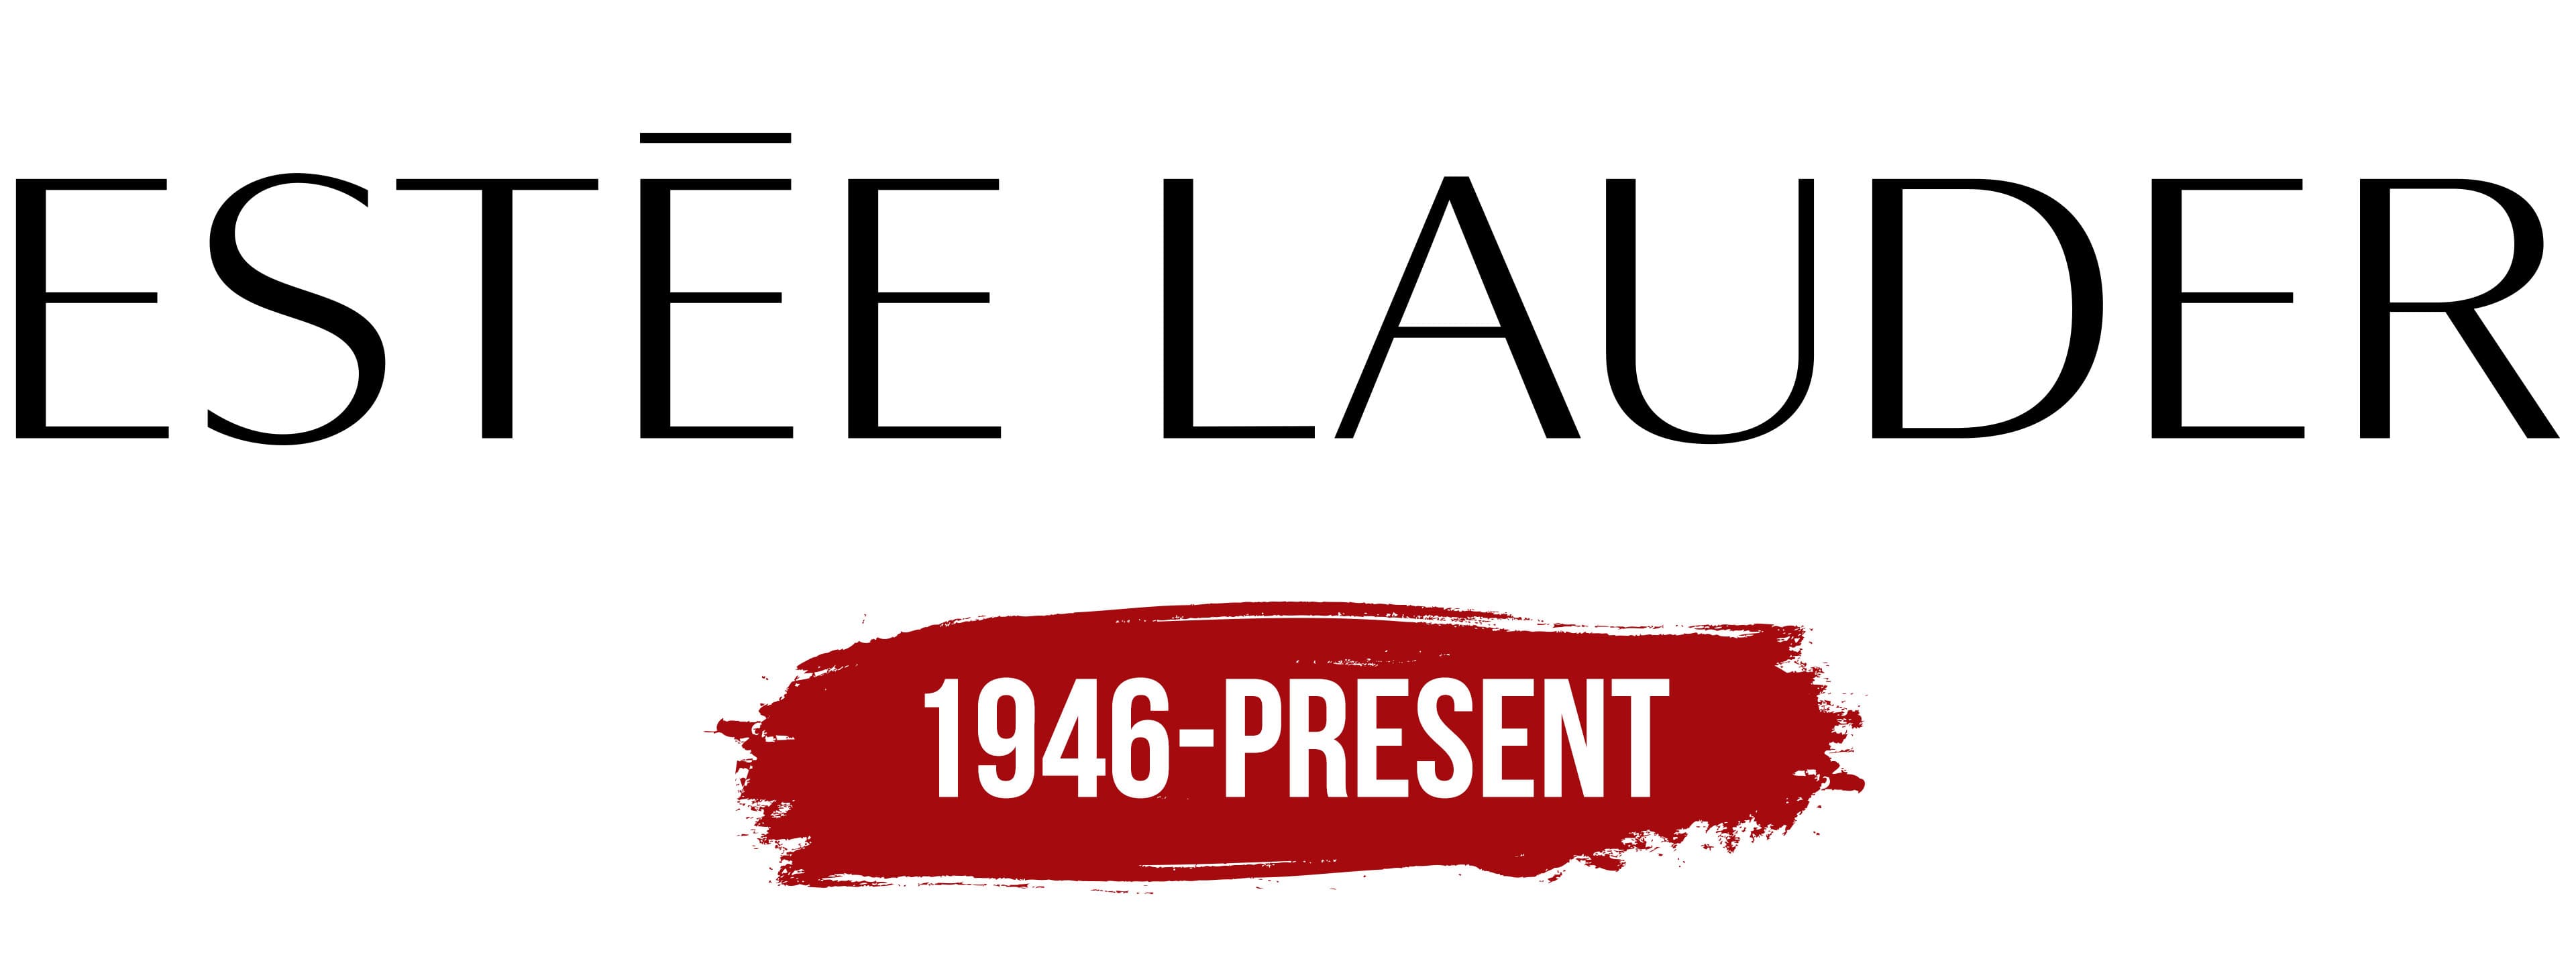 The History Of Estée Lauder - Escentual's Blog